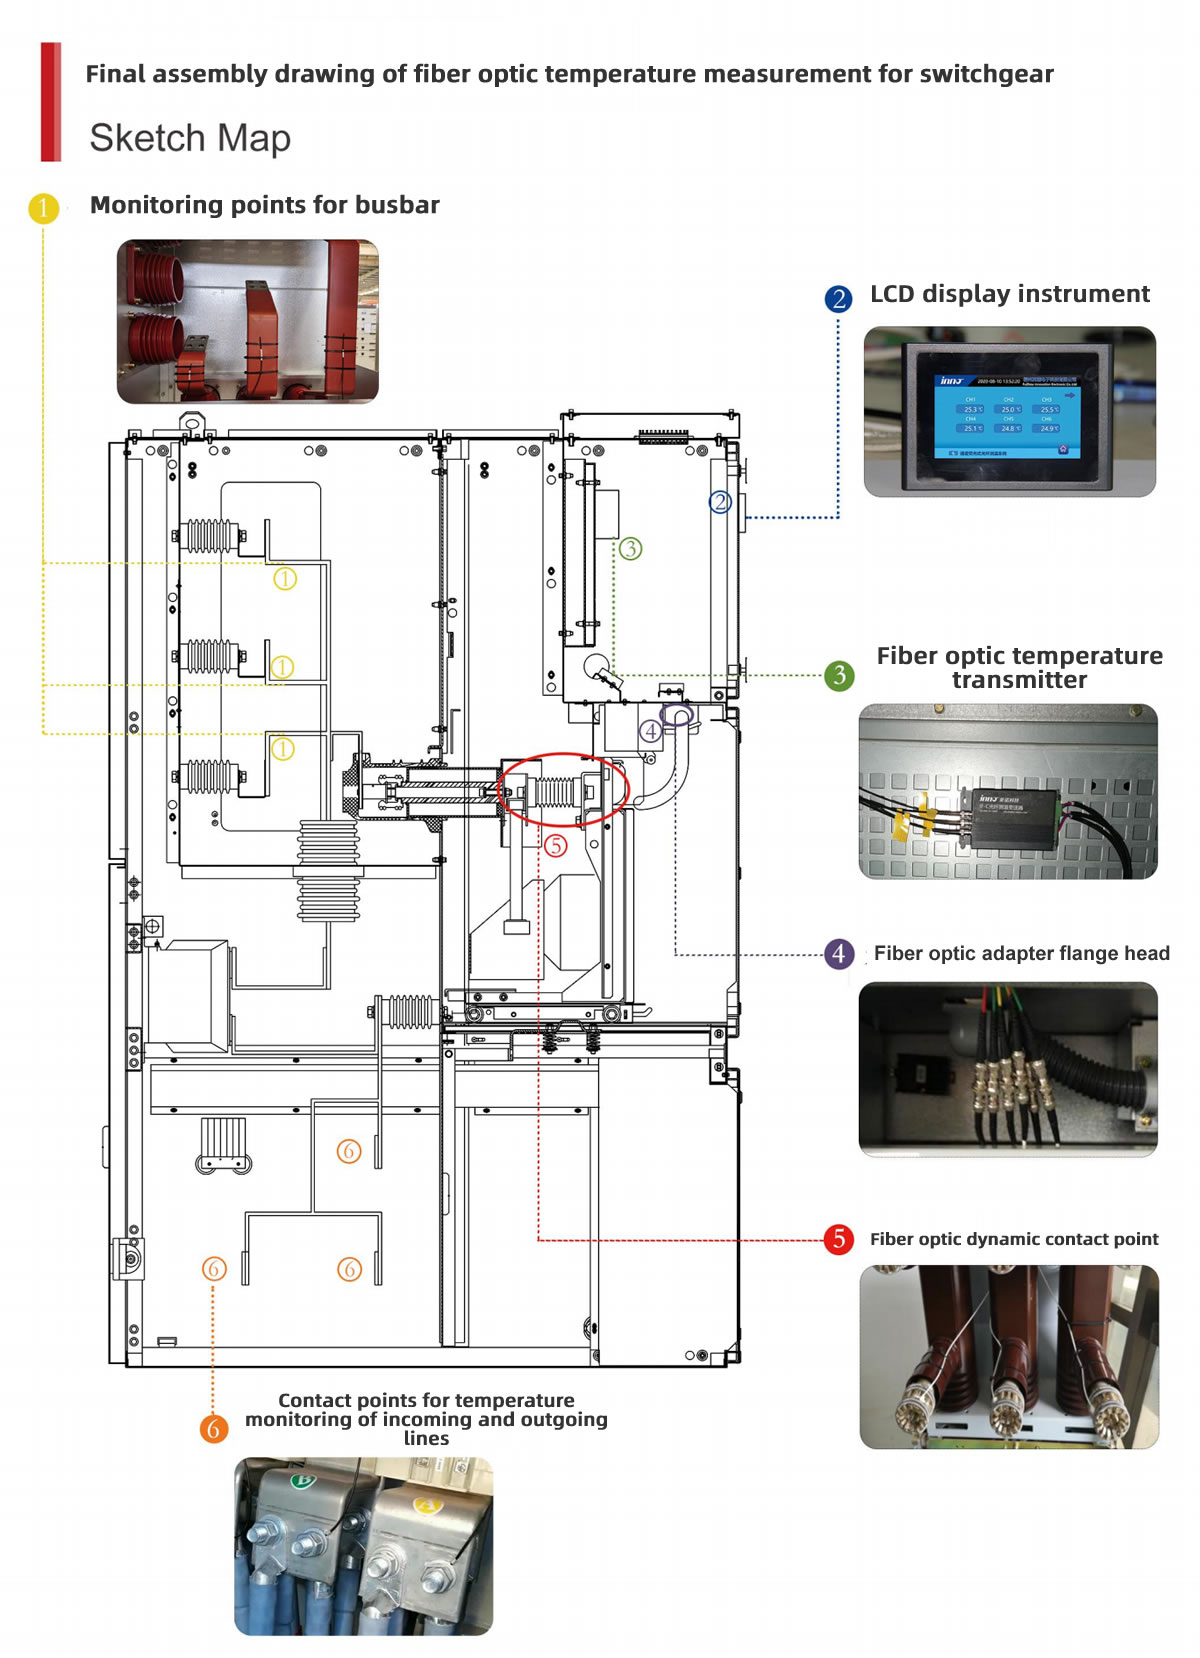 Fiber optic temperature measurement system for switchgear - Fiber Optic Temperature Measurement For Switchgear - 1